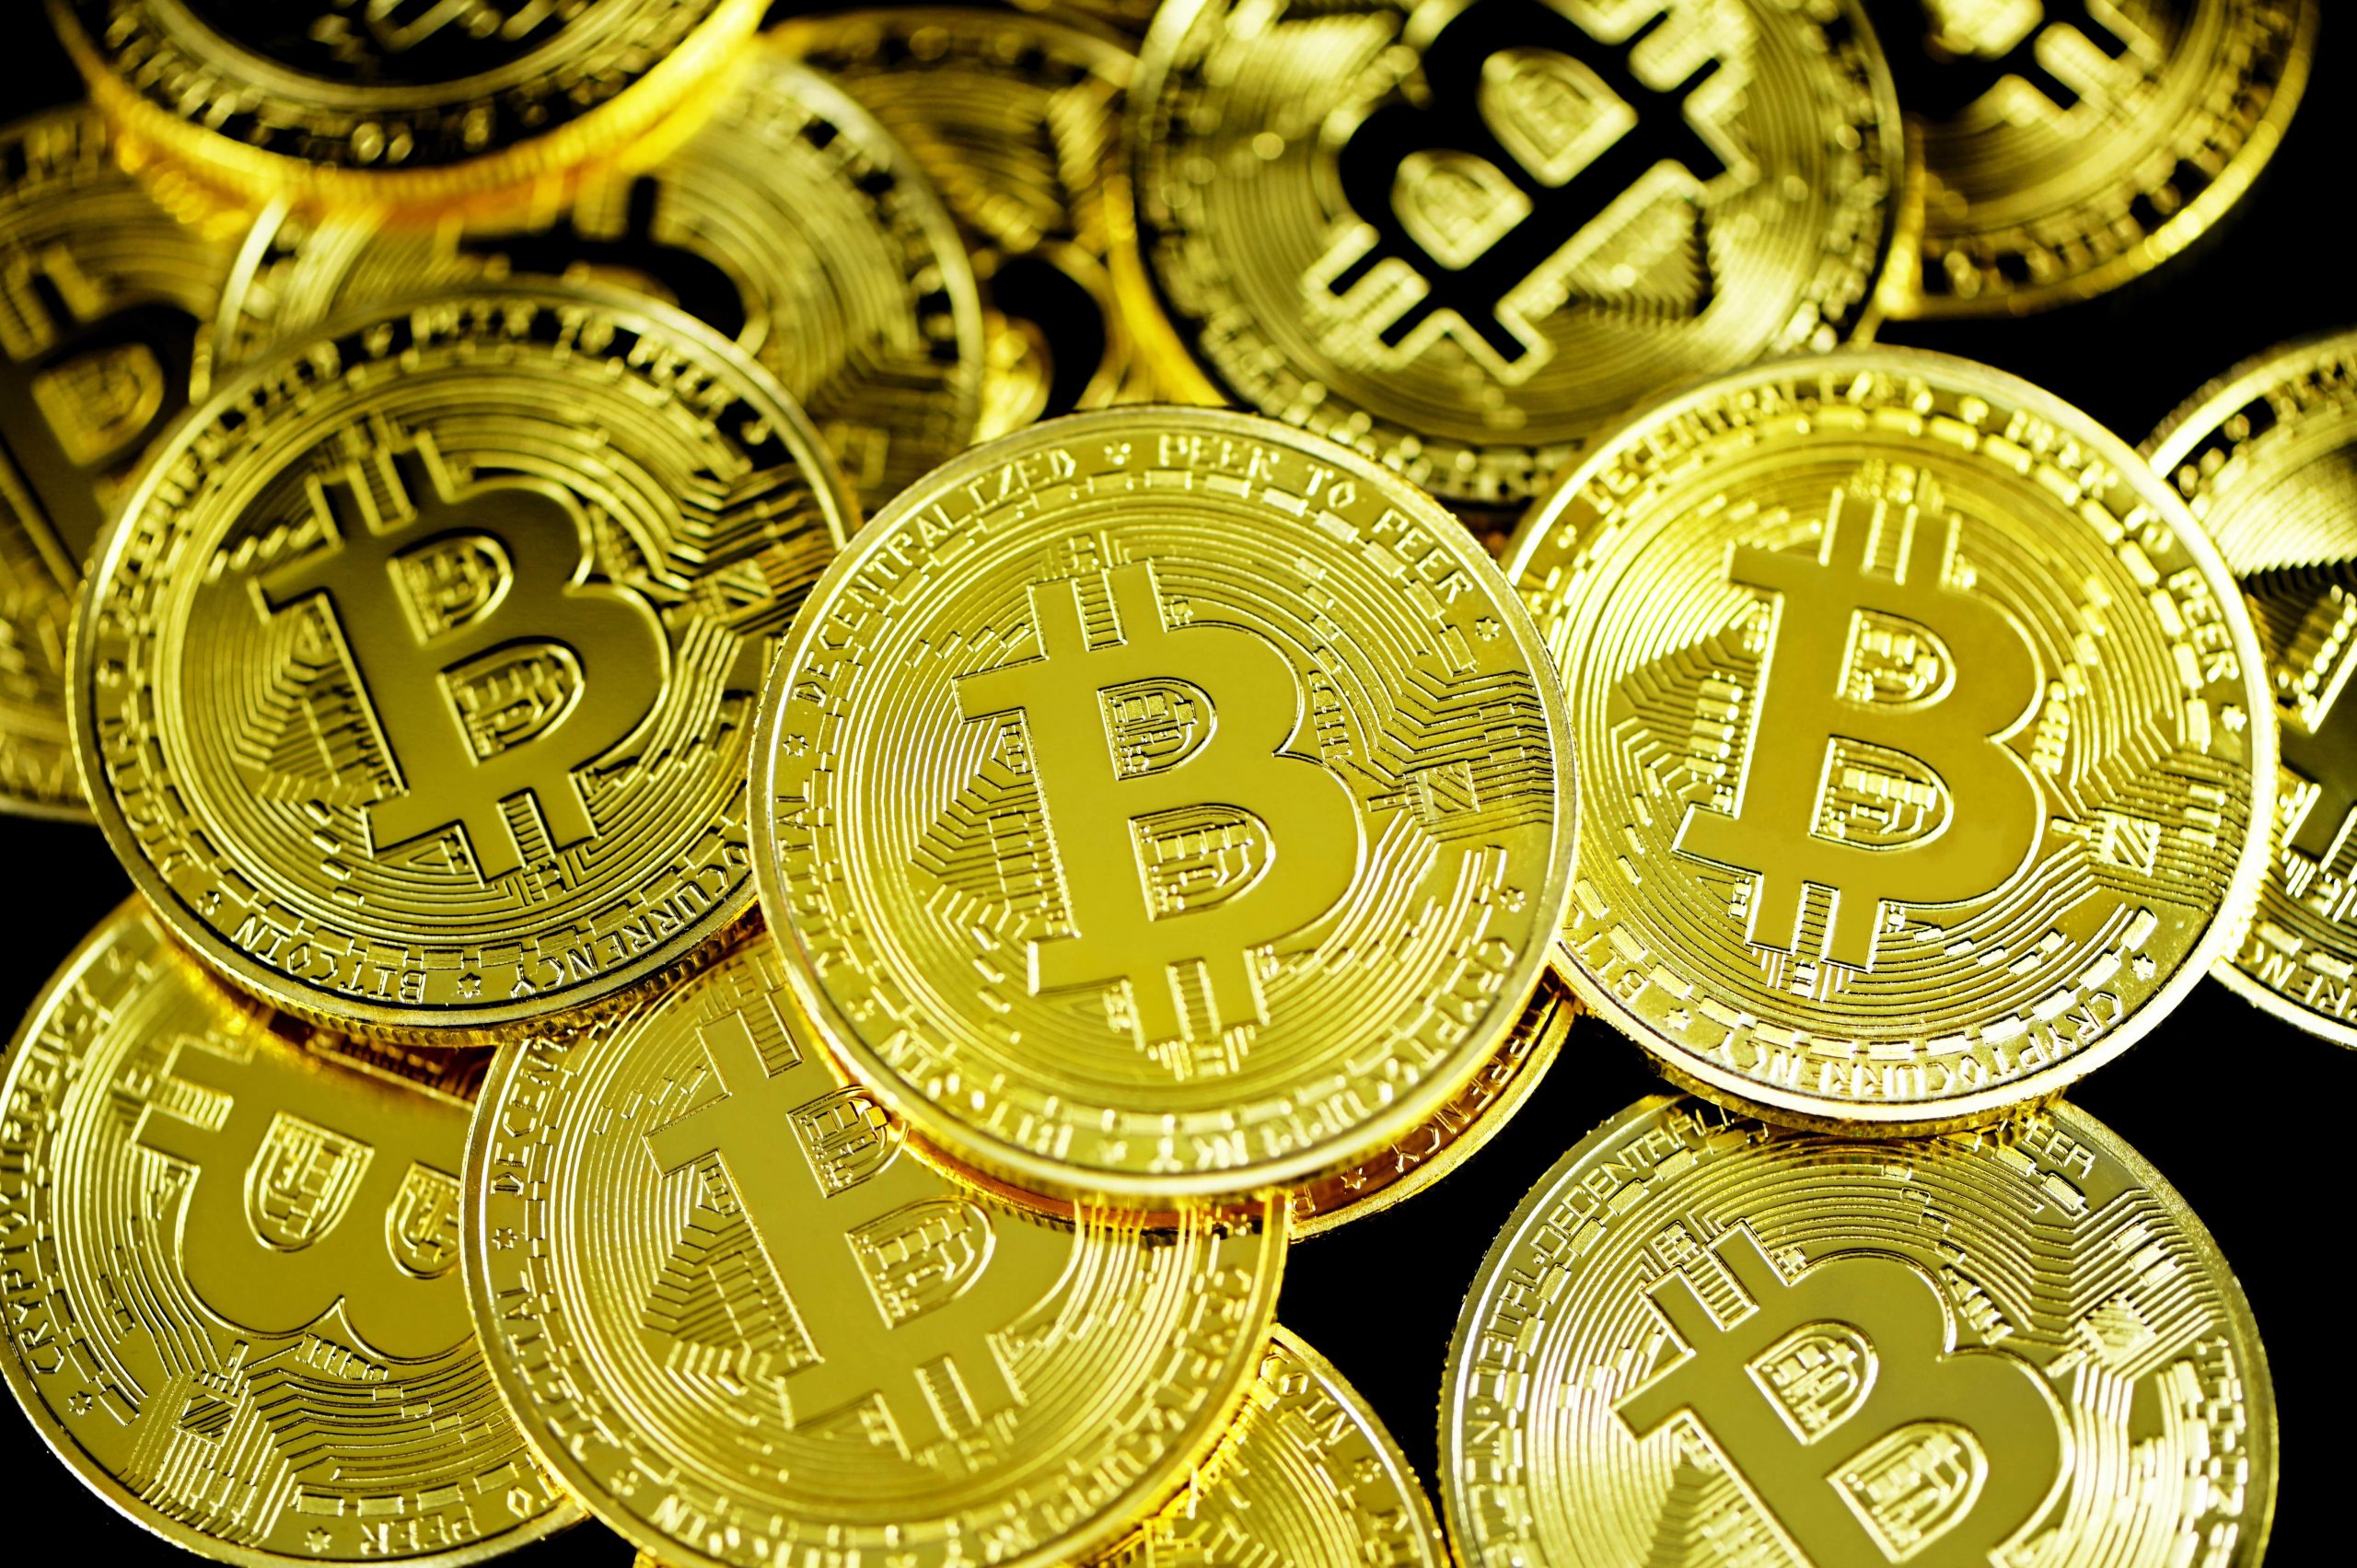 bitcoin trading hk)